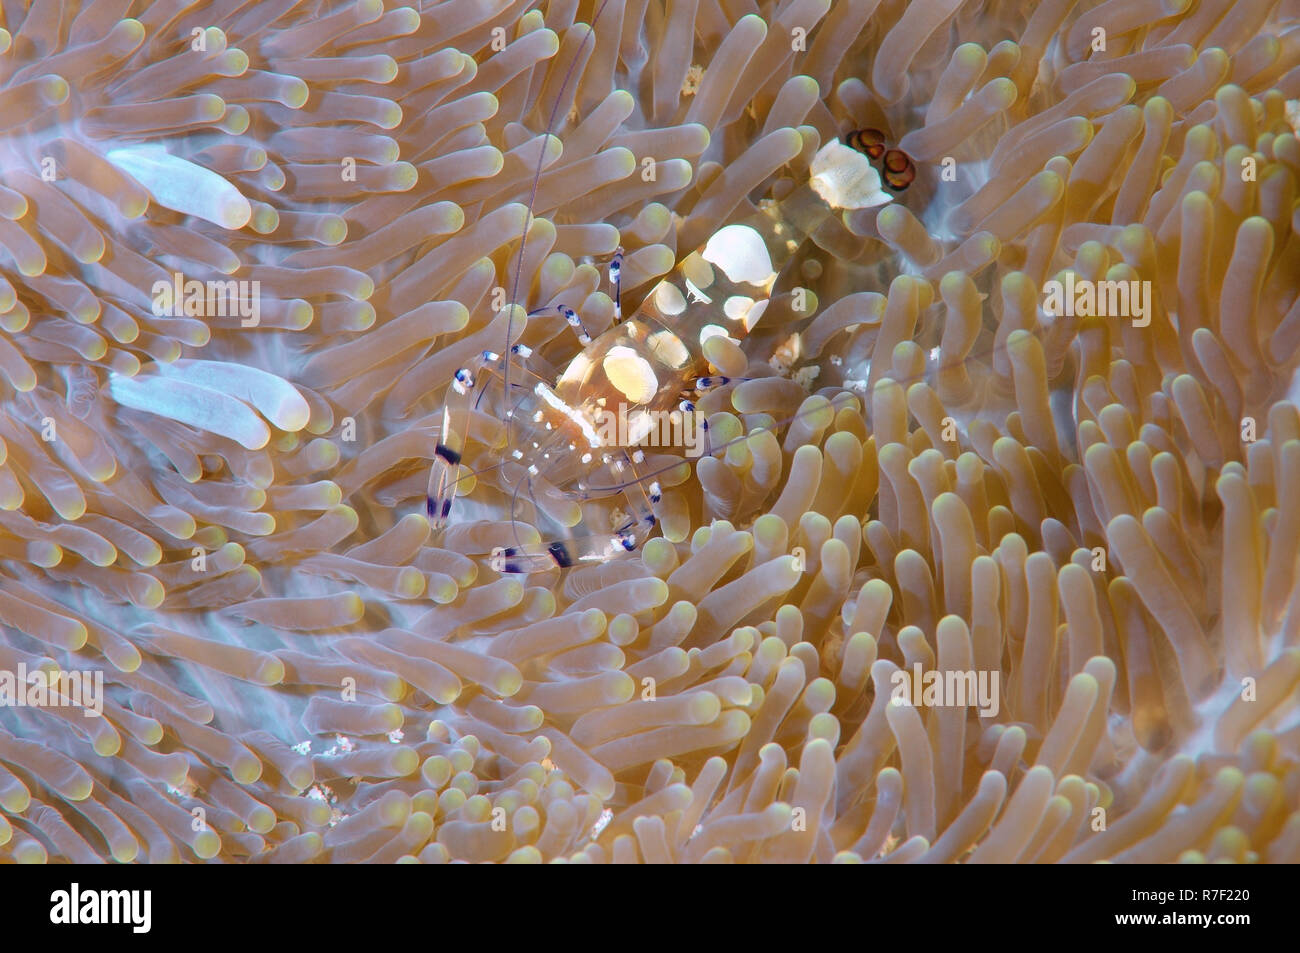 Glass Anemone Shrimp (Periclimenes brevicarpalis), Bohol Sea, Philippines Stock Photo